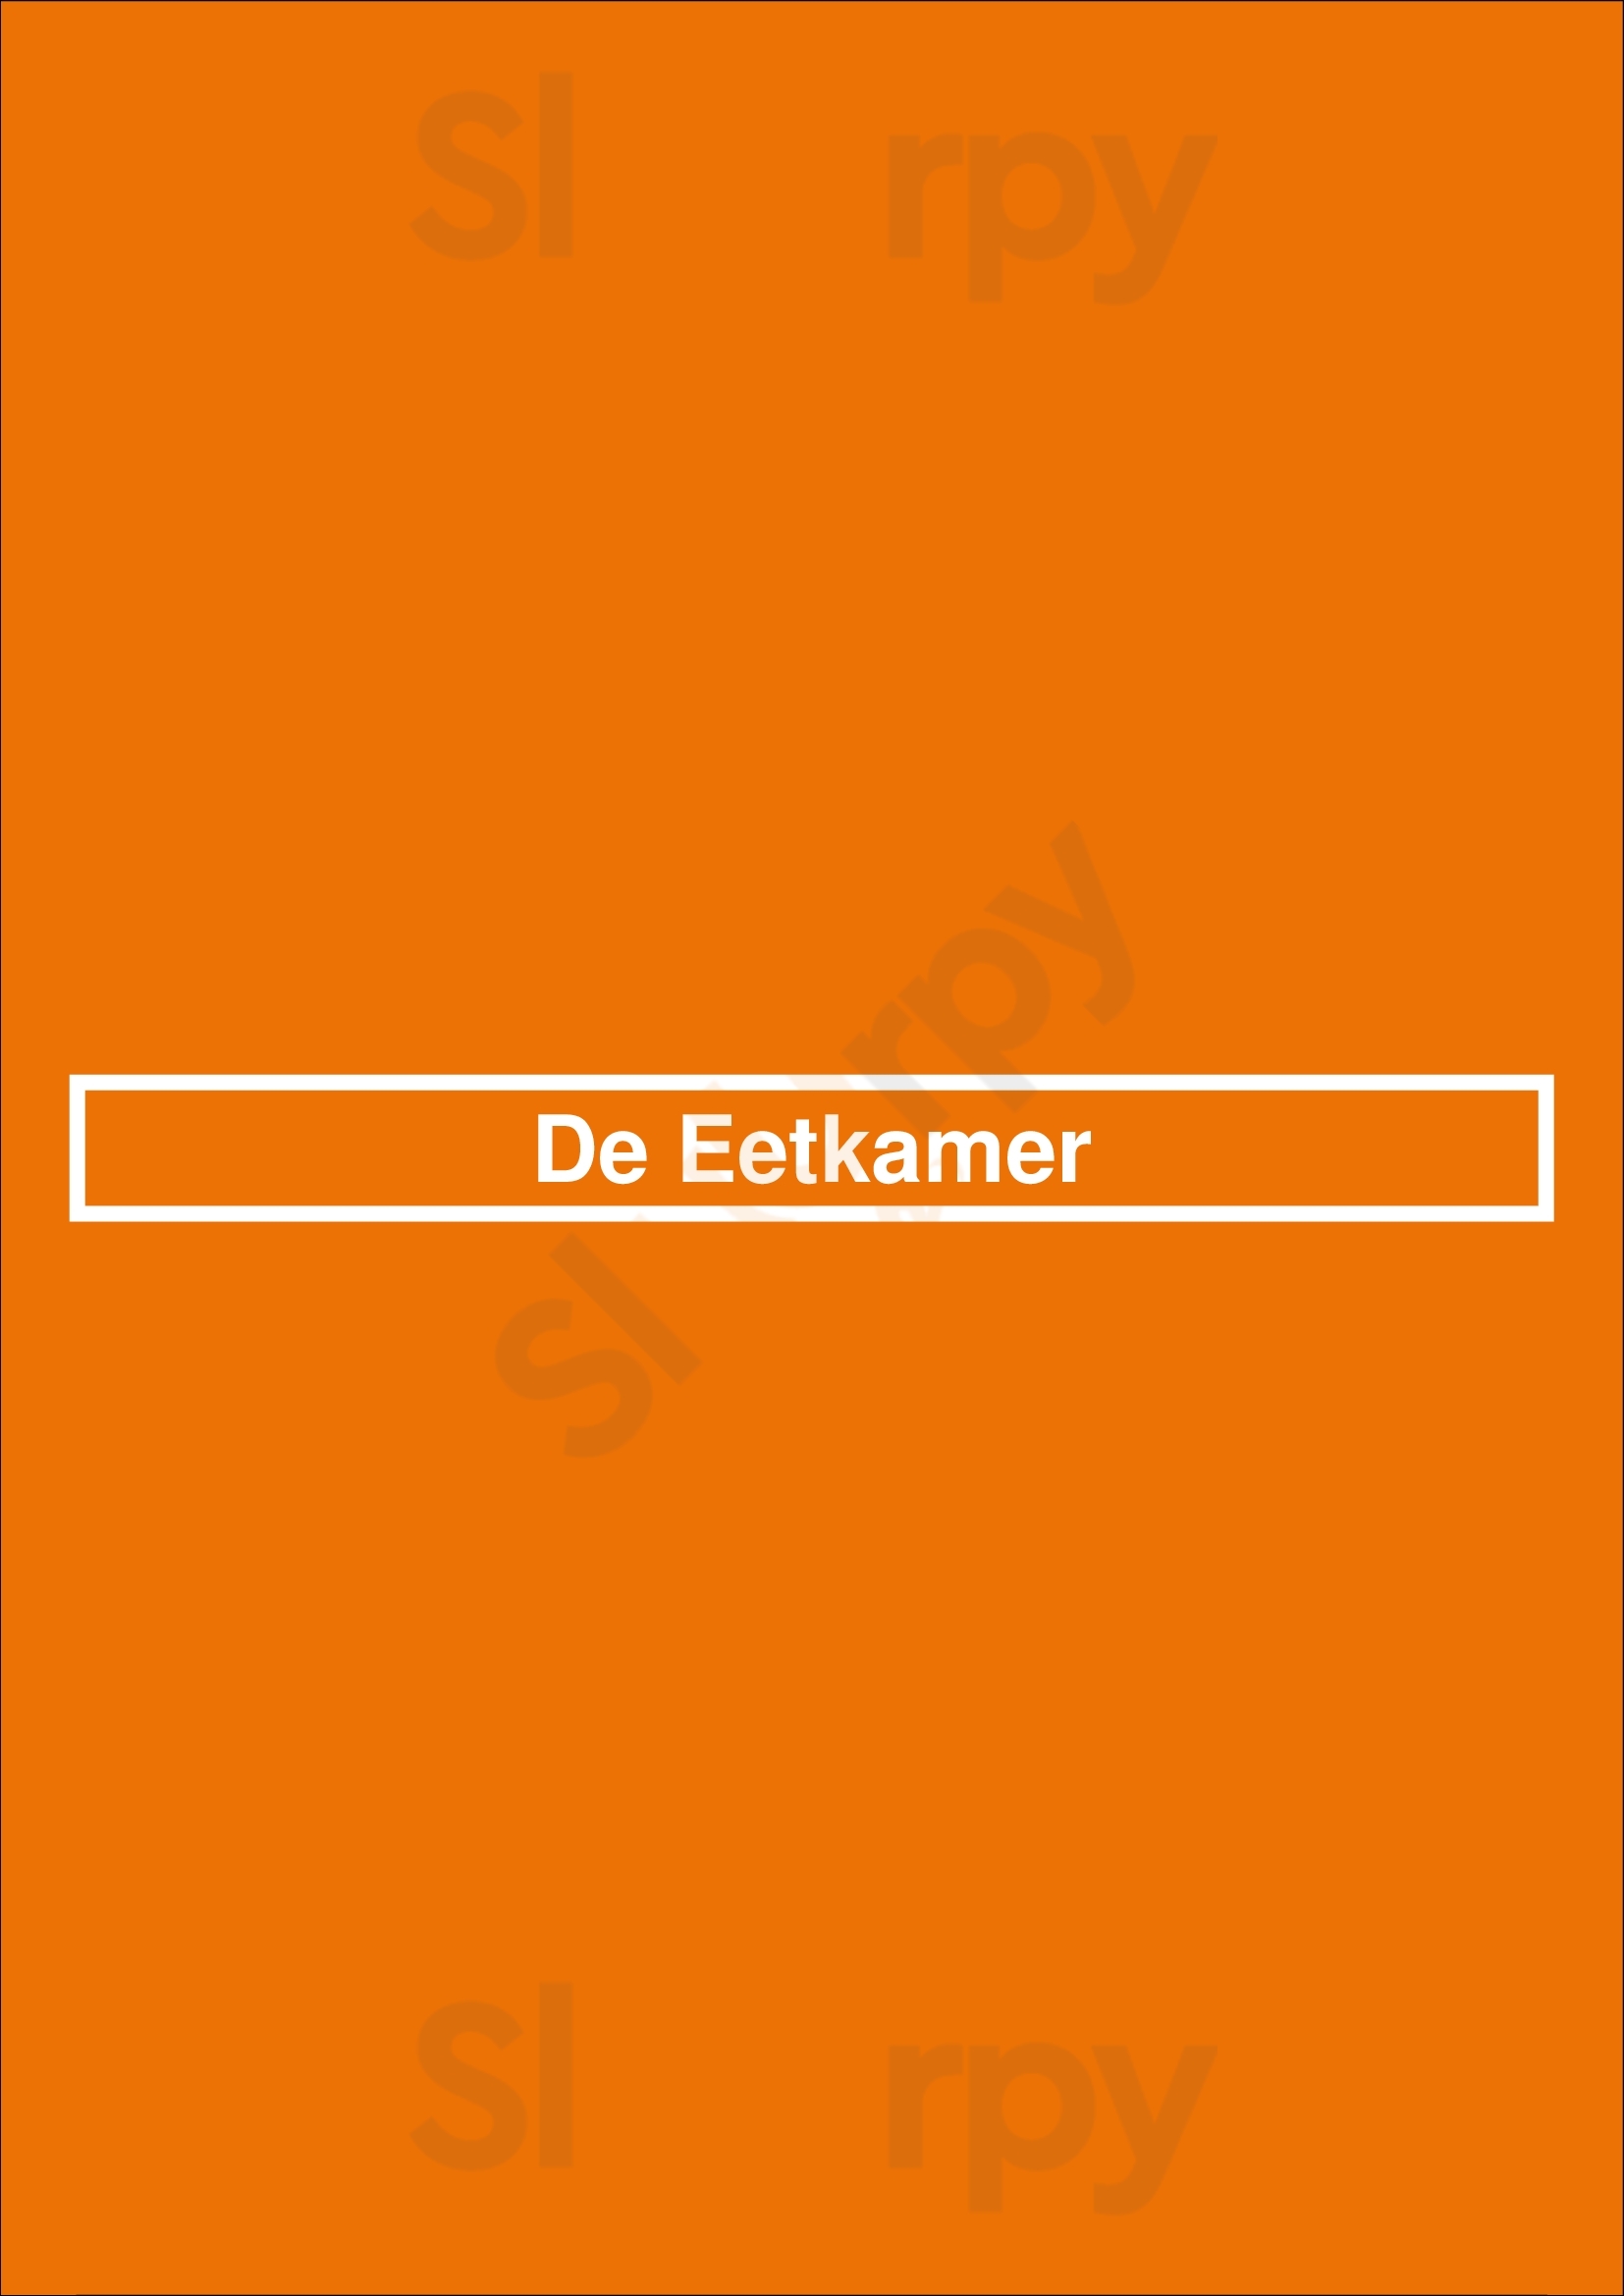 De Eetkamer Middelburg Menu - 1